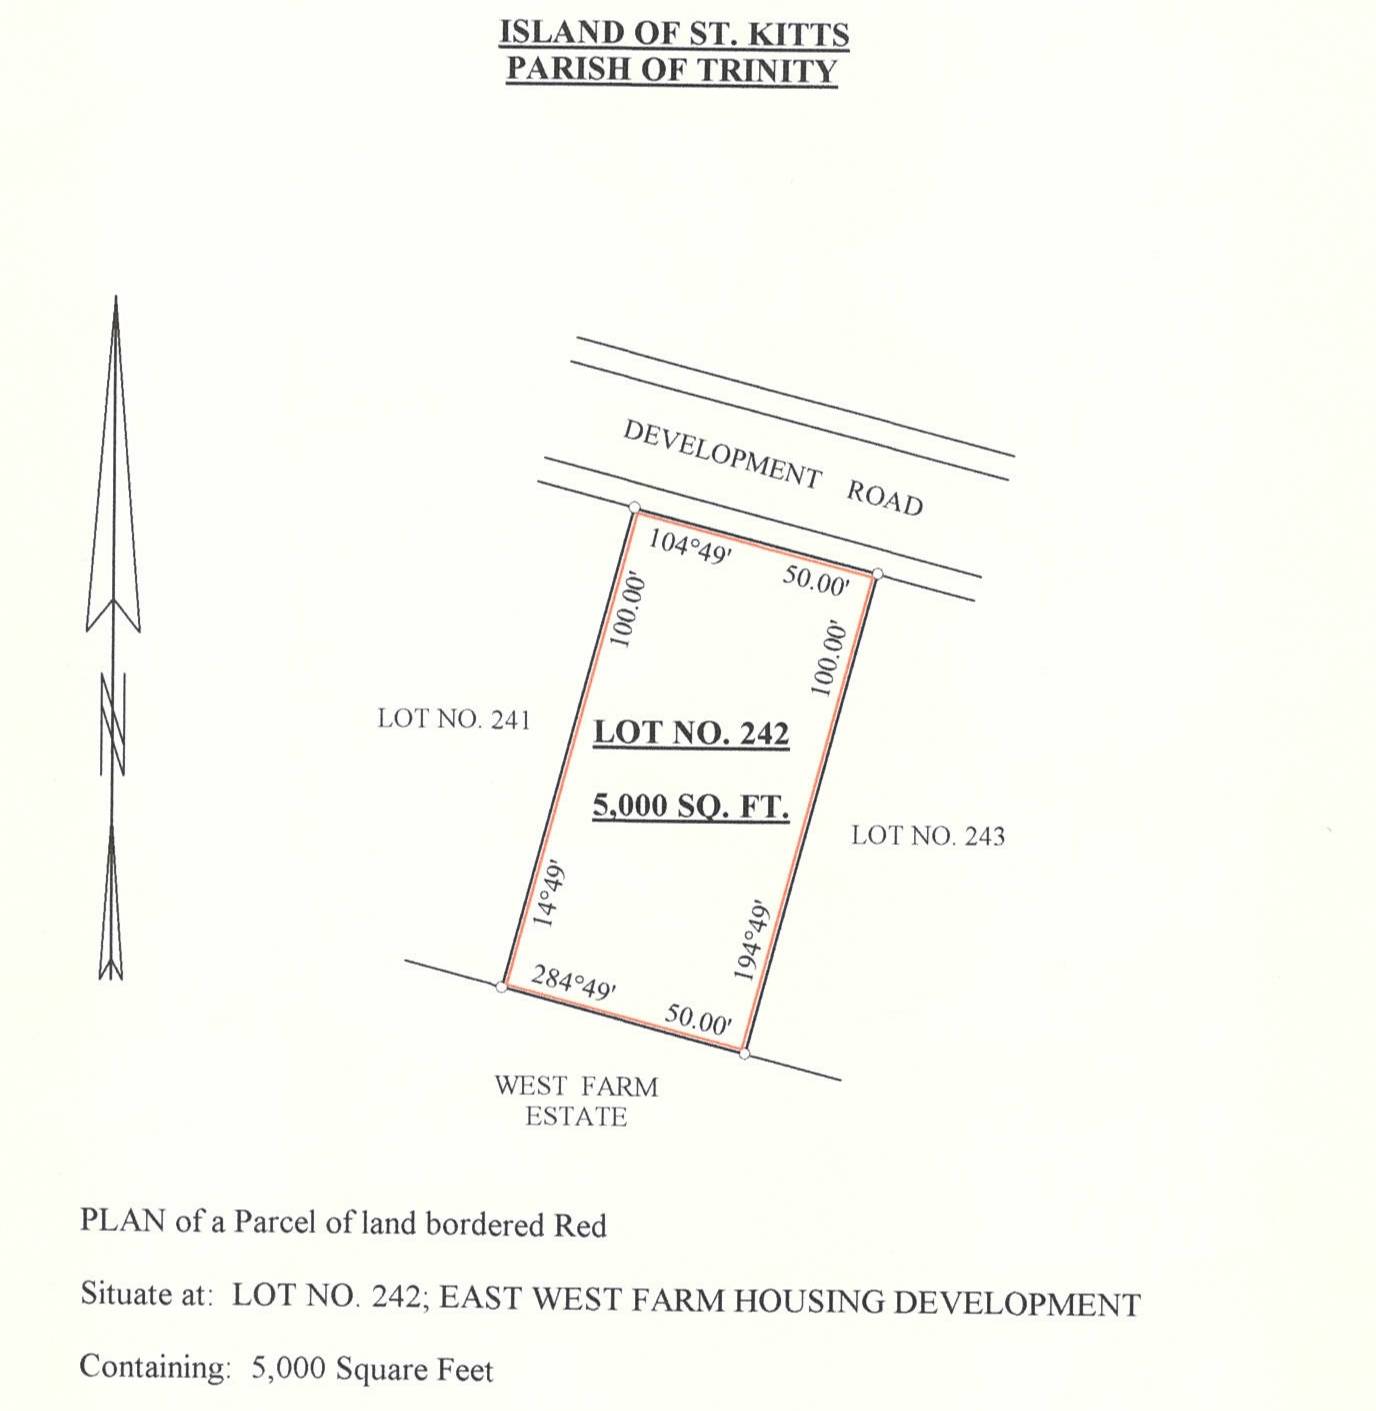 Land for sale at East West Farm housing development, St. Kitts